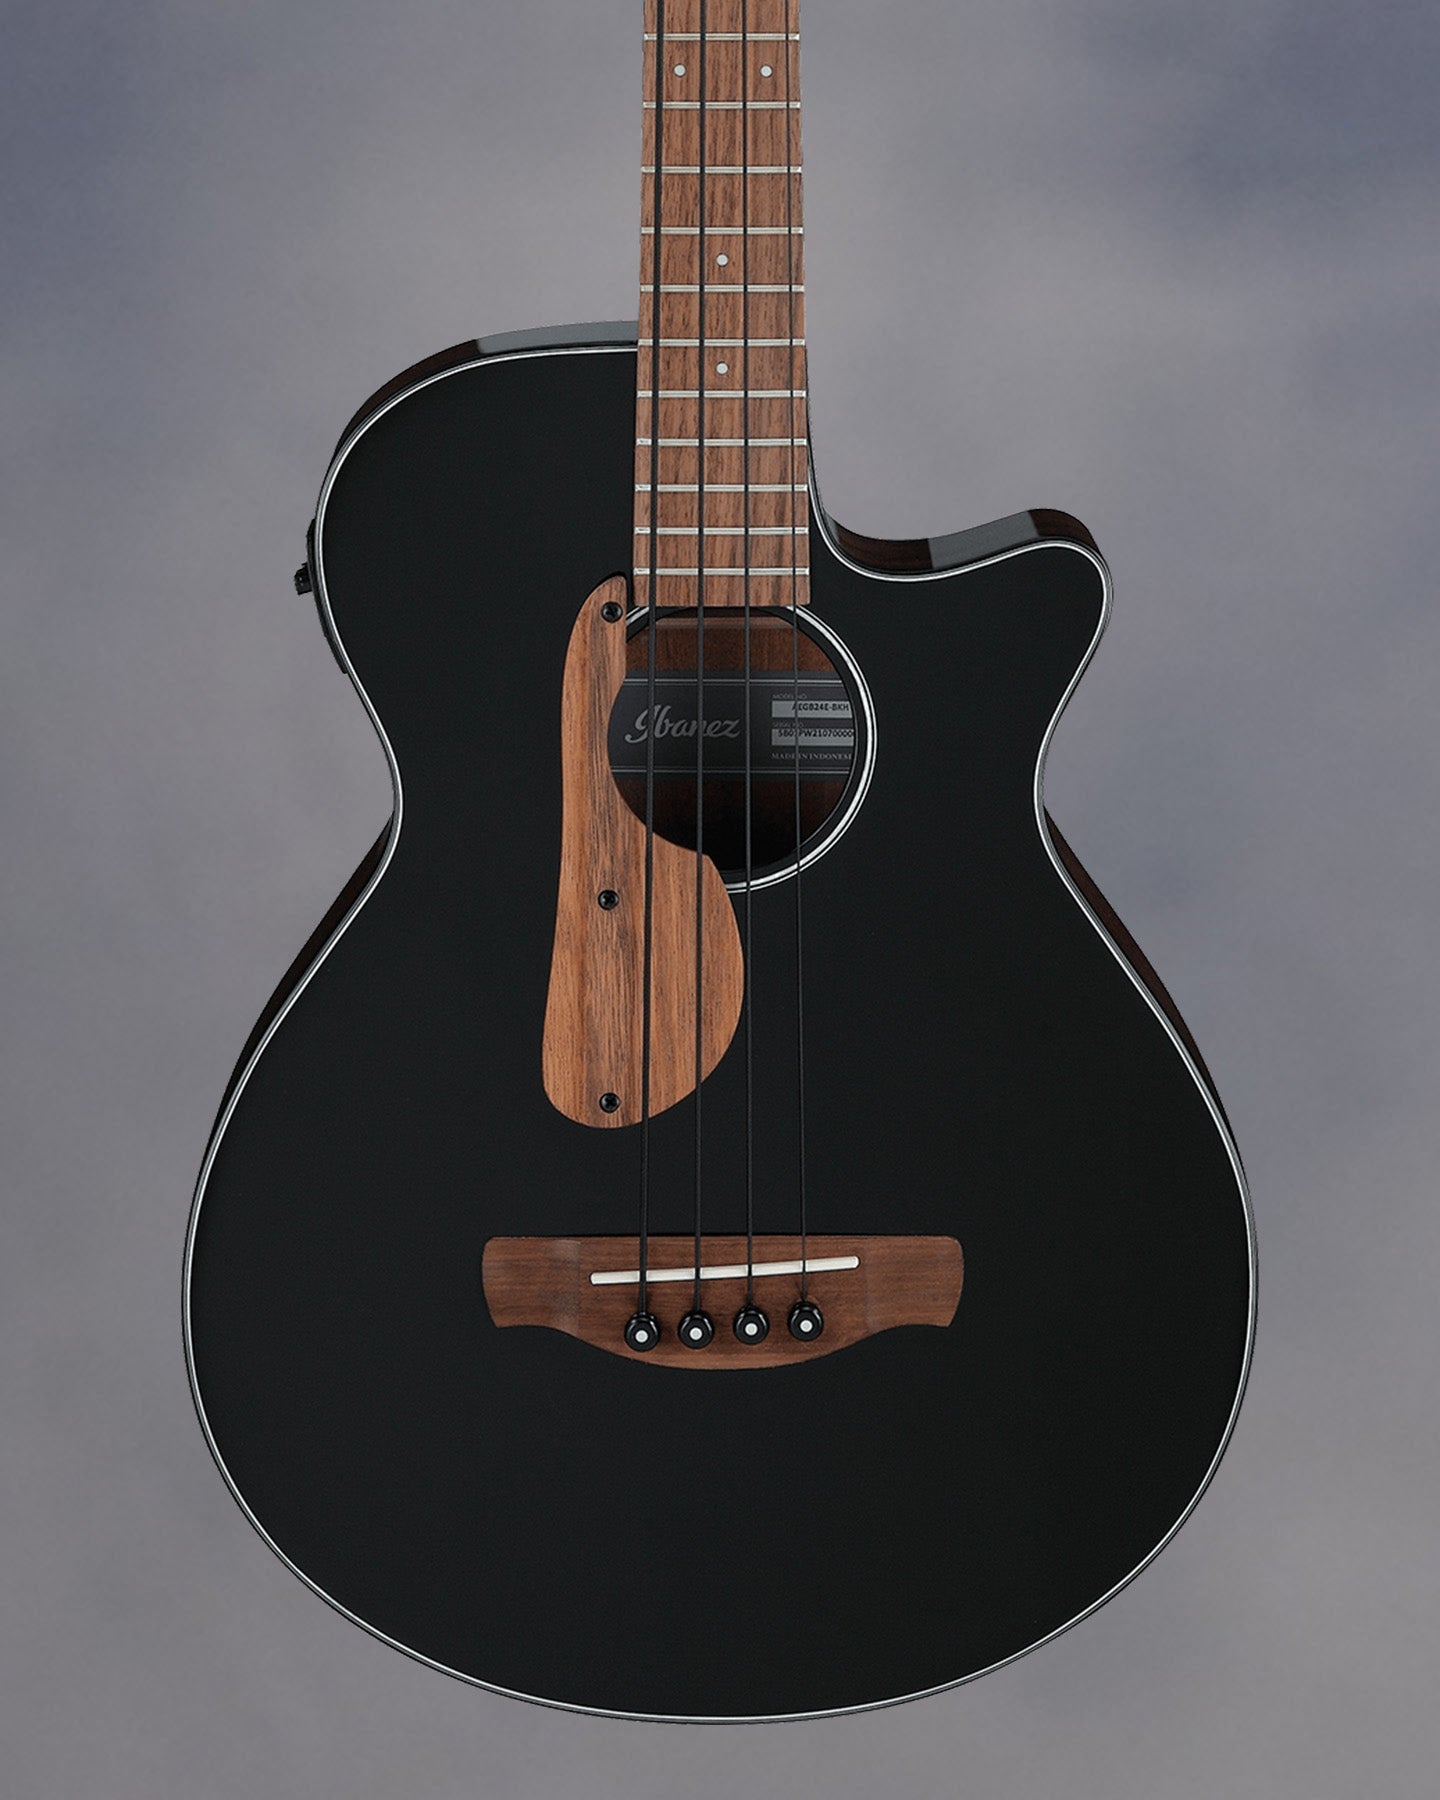 AEGB24EBKH Electric Acoustic Bass Guitar, Black High Gloss